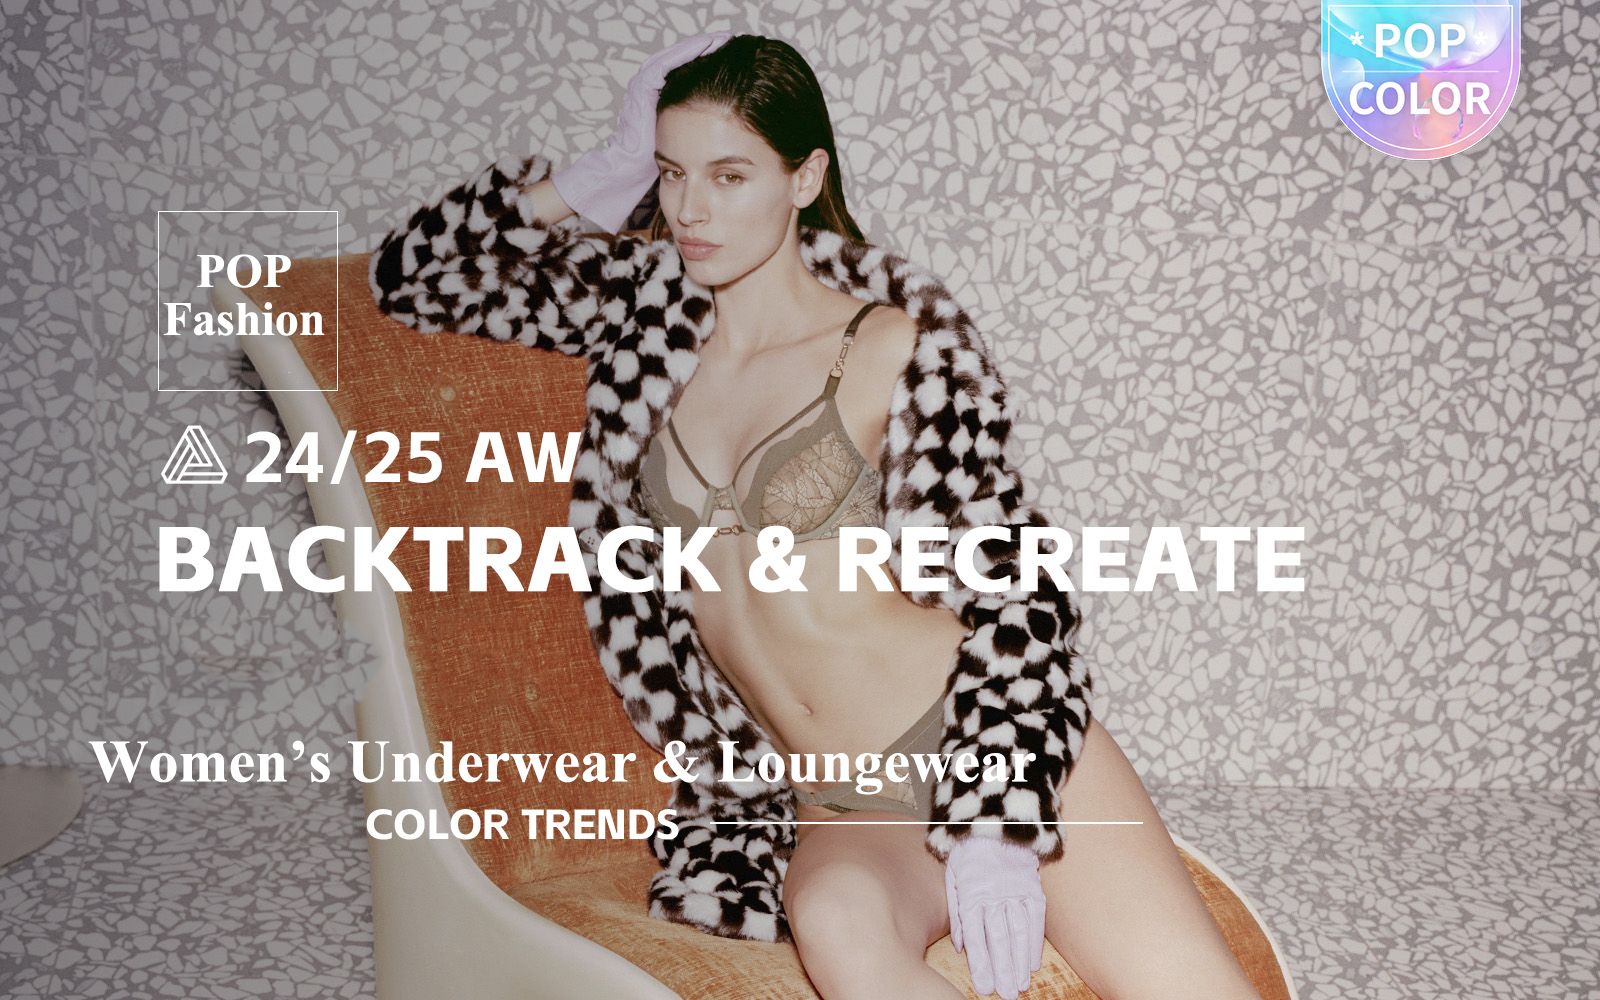 Backtrack & Recreate -- The Color Trend for Women's Underwear & Loungewear